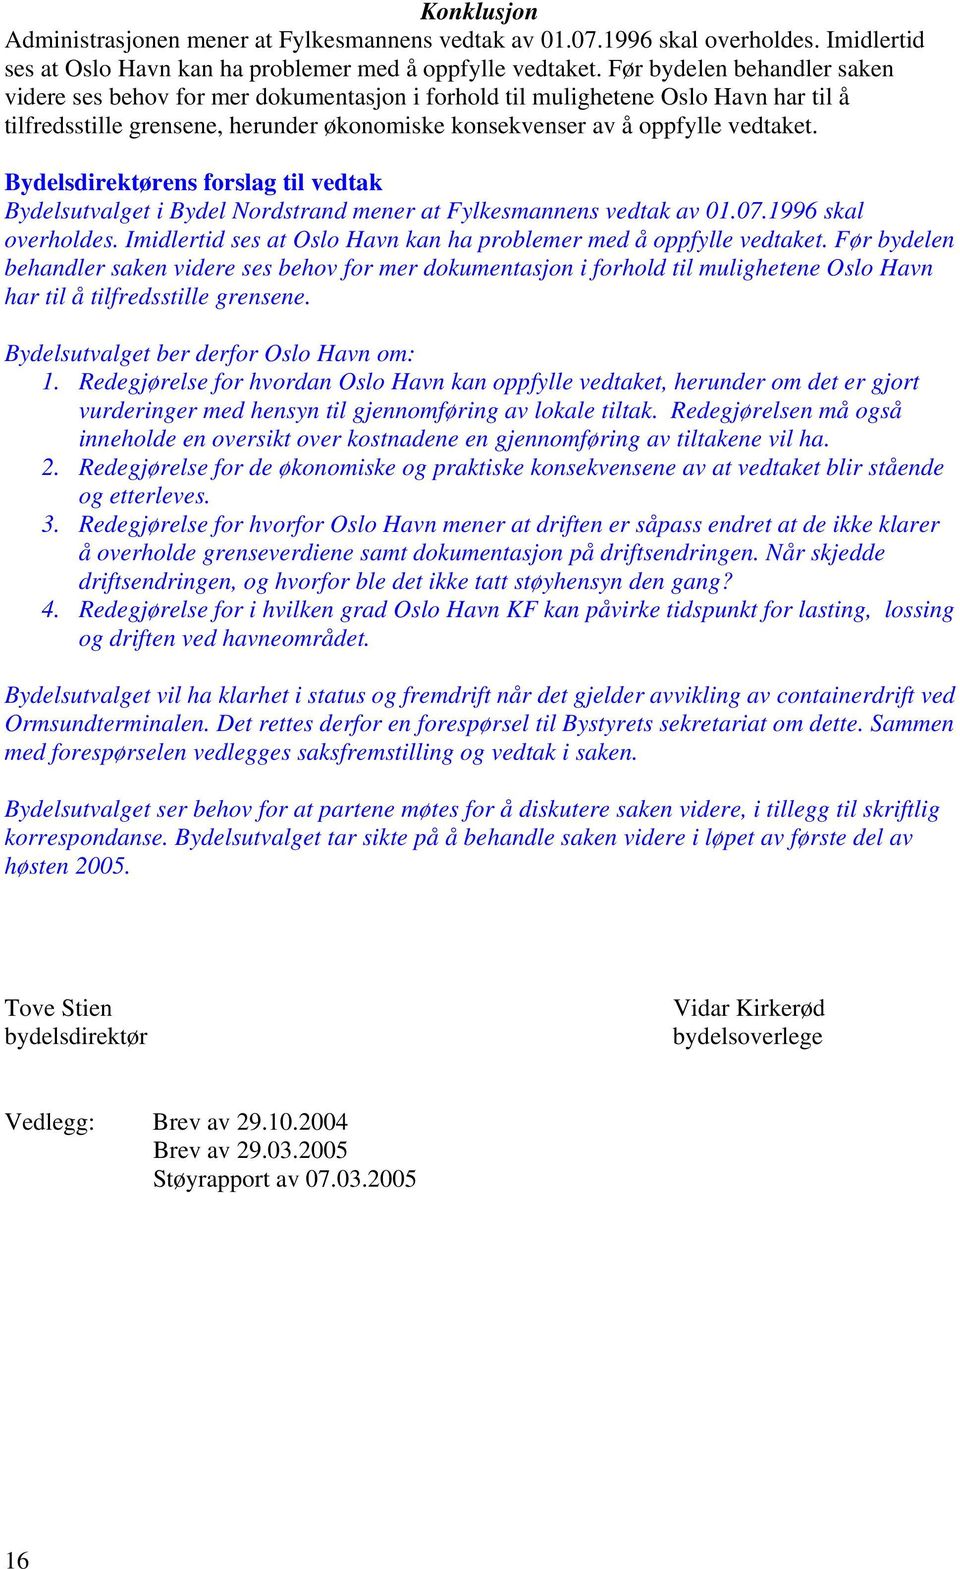 Bydelsdirektørens forslag til vedtak Bydelsutvalget i Bydel Nordstrand mener at Fylkesmannens vedtak av 01.07.1996 skal overholdes.